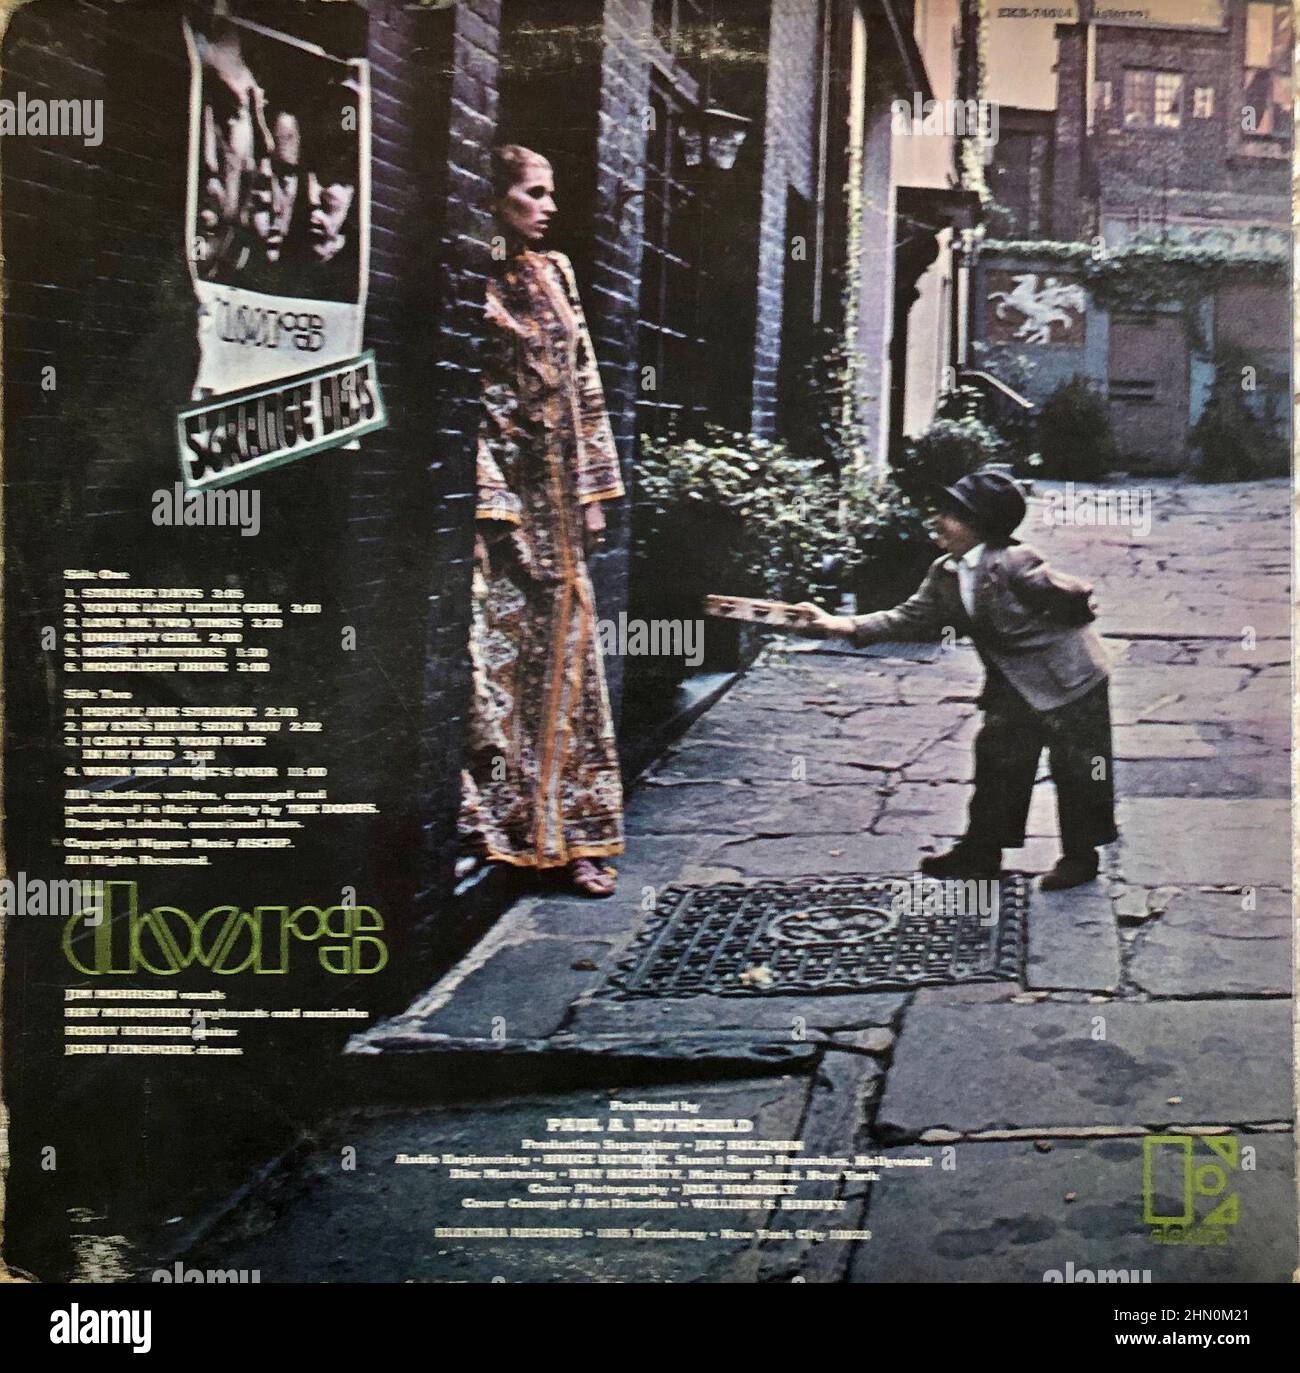 Doors – Strange Days sealed original 1967 U.S. mono LP